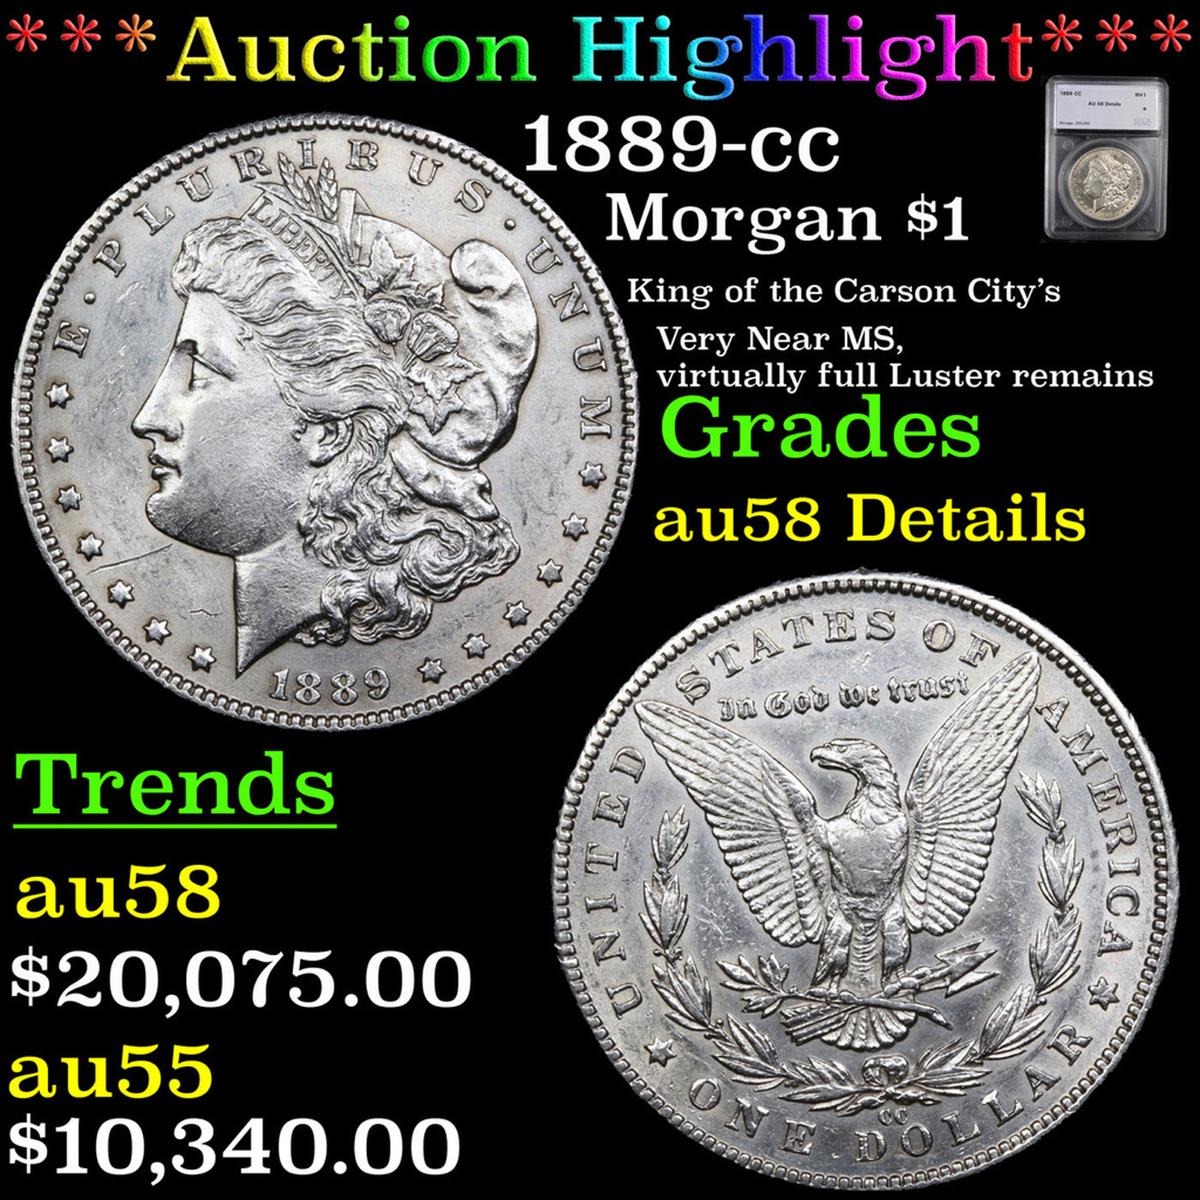 ***Auction Highlight*** 1889-cc Morgan Dollar 1 Graded au58 Details By SEGS (fc)